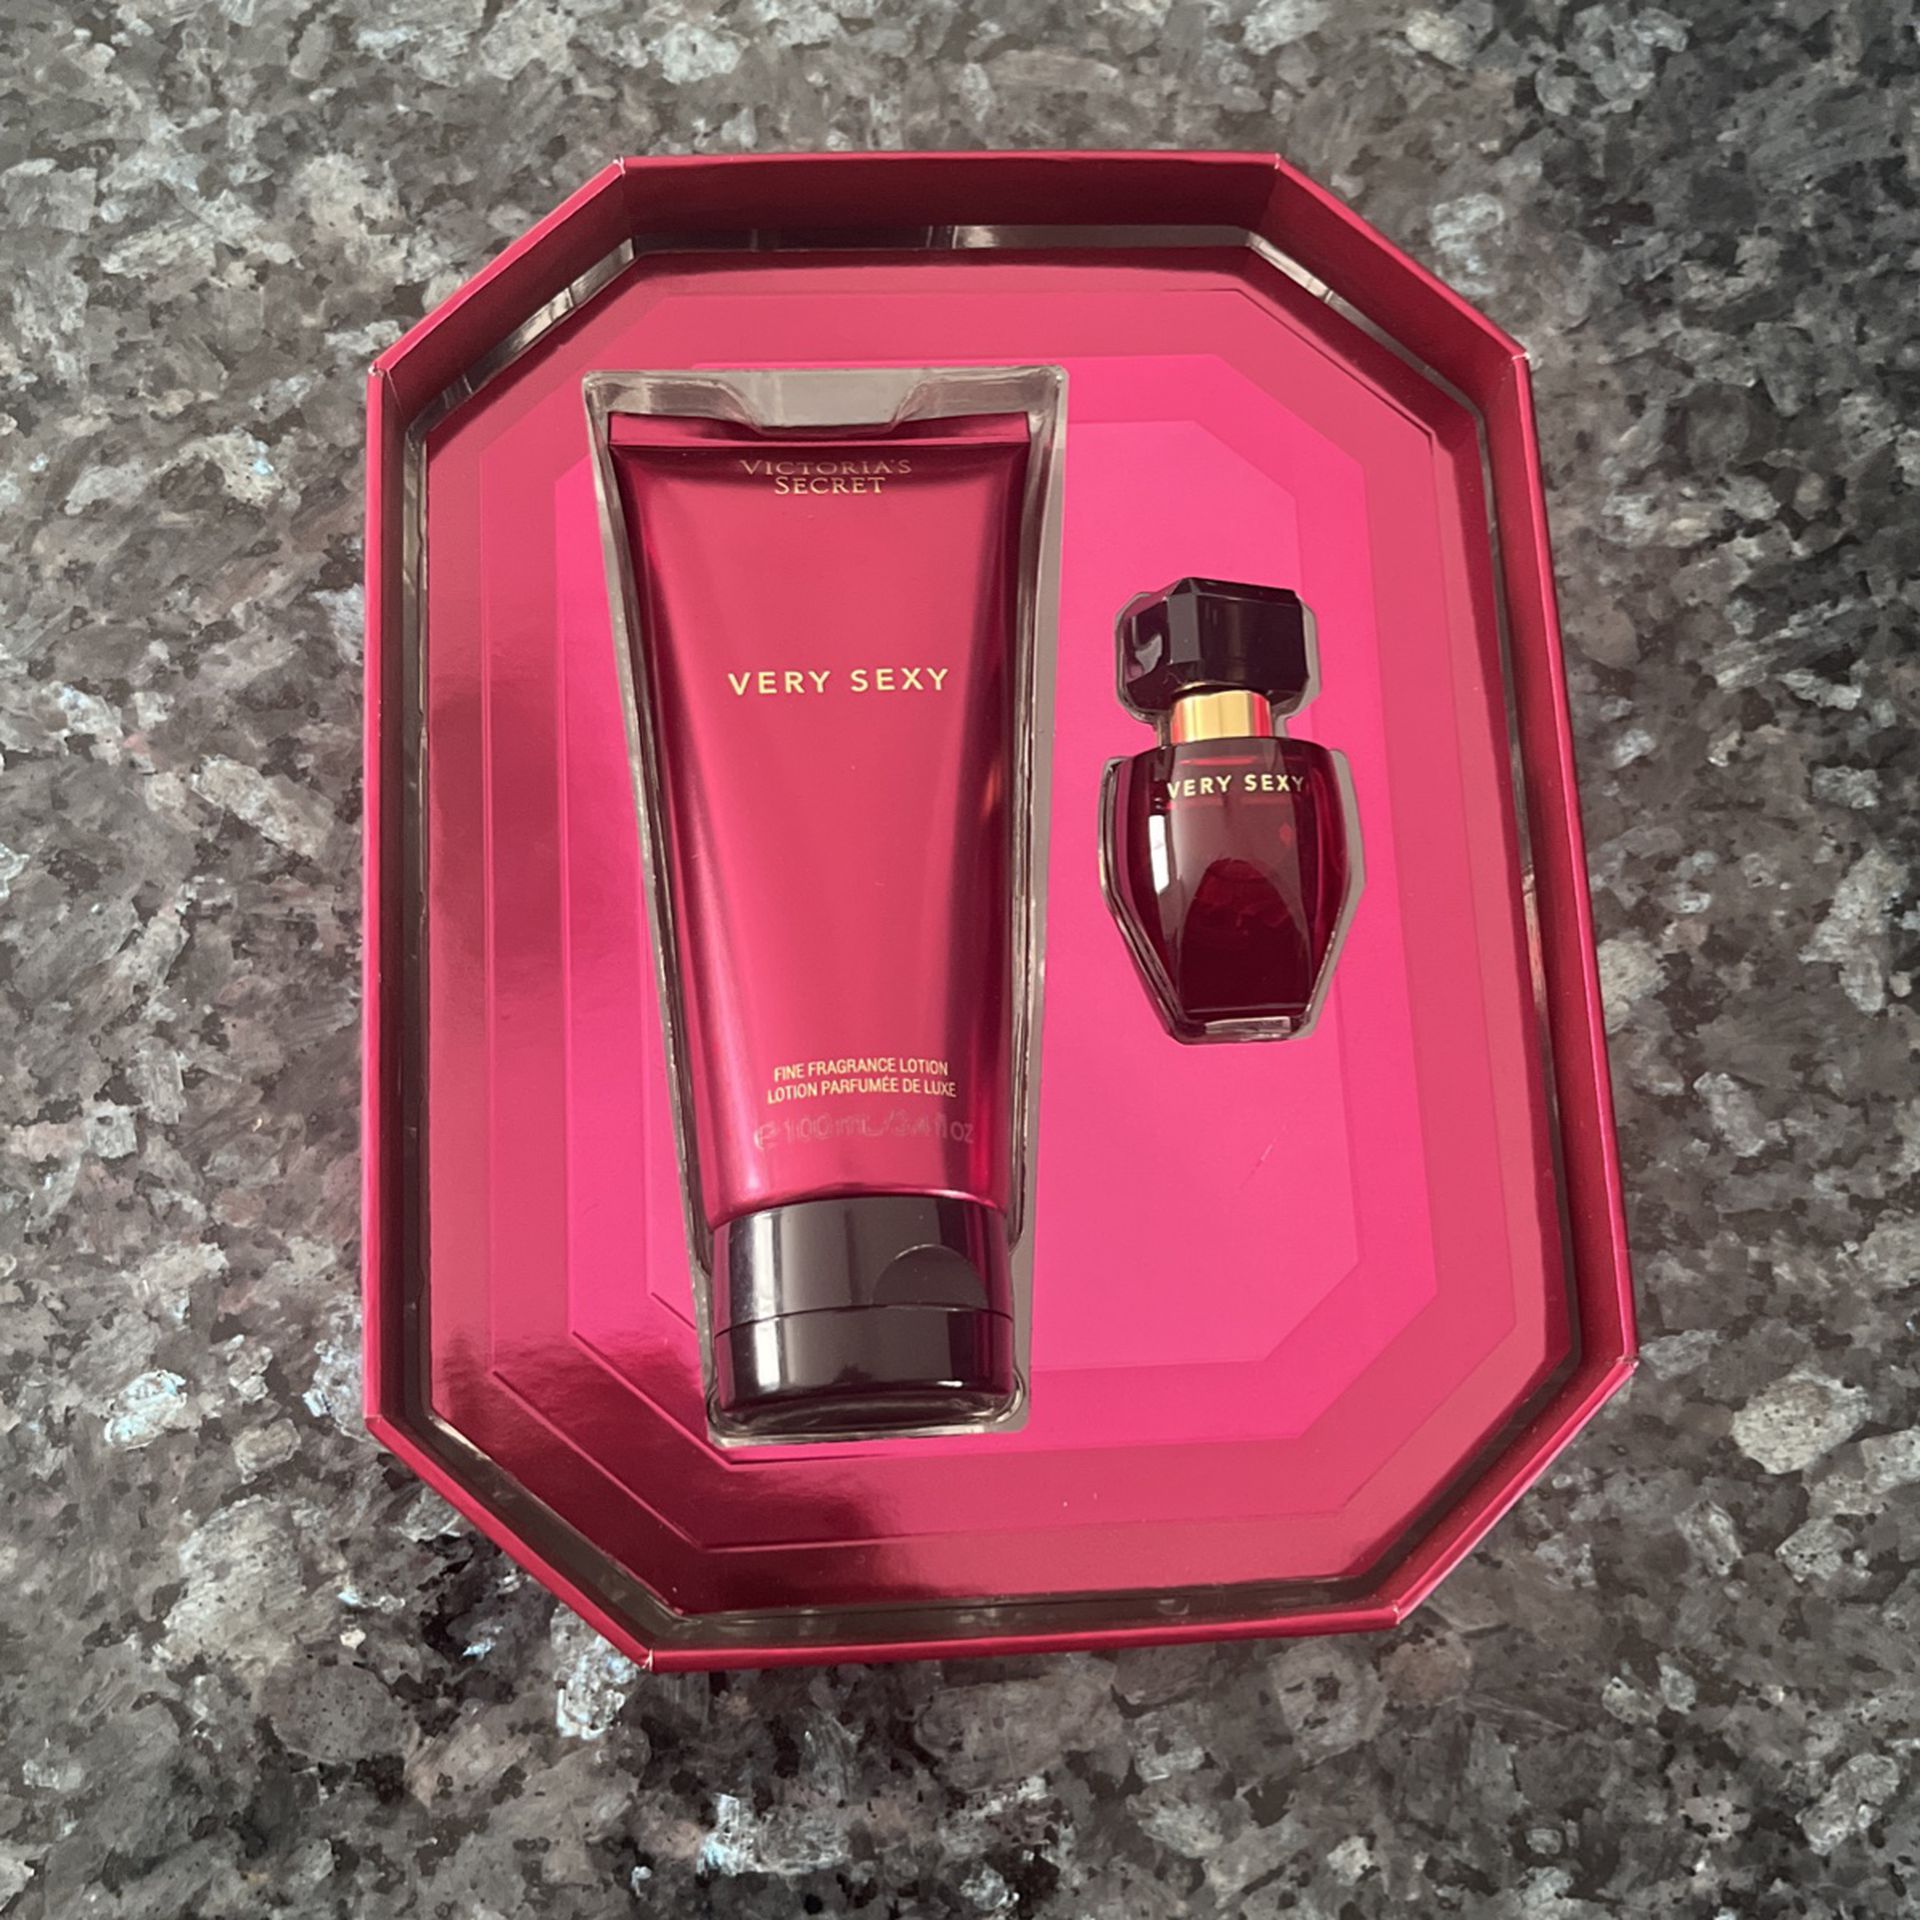 Victoria’s Secret Lotion And Perfume